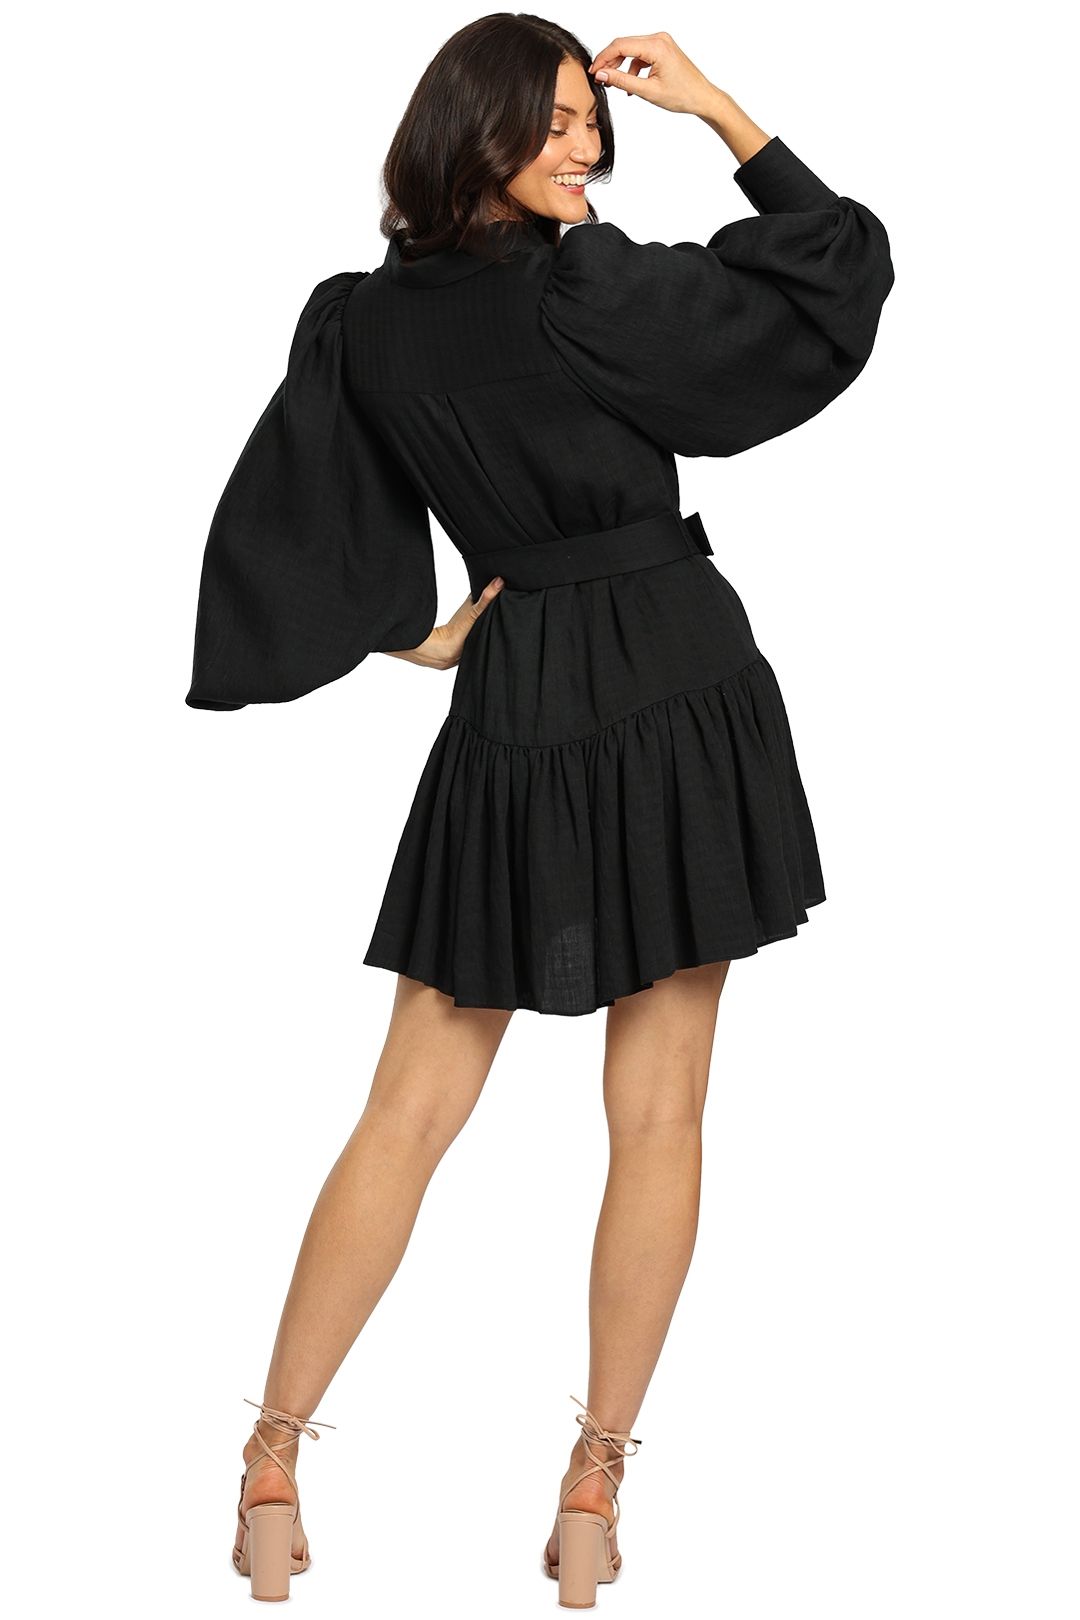 Acler Shirwood Dress Black mini